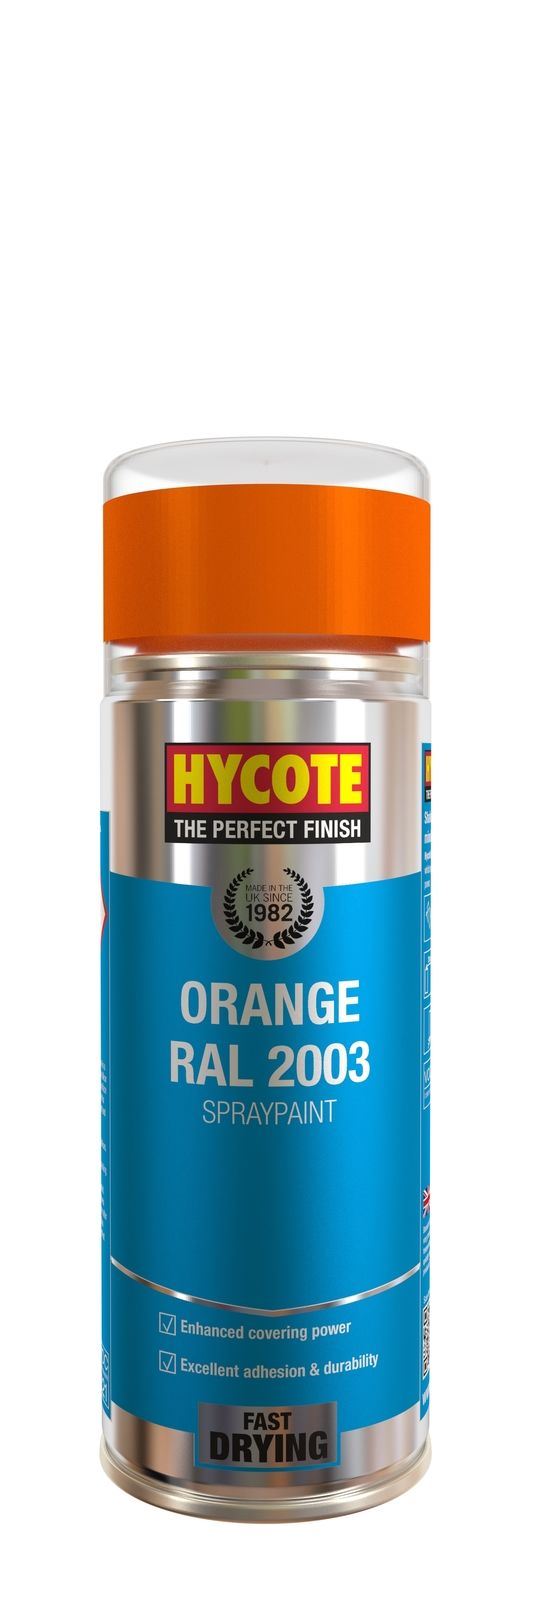 Hycote Orange Ral 2003 Paint - 400ml